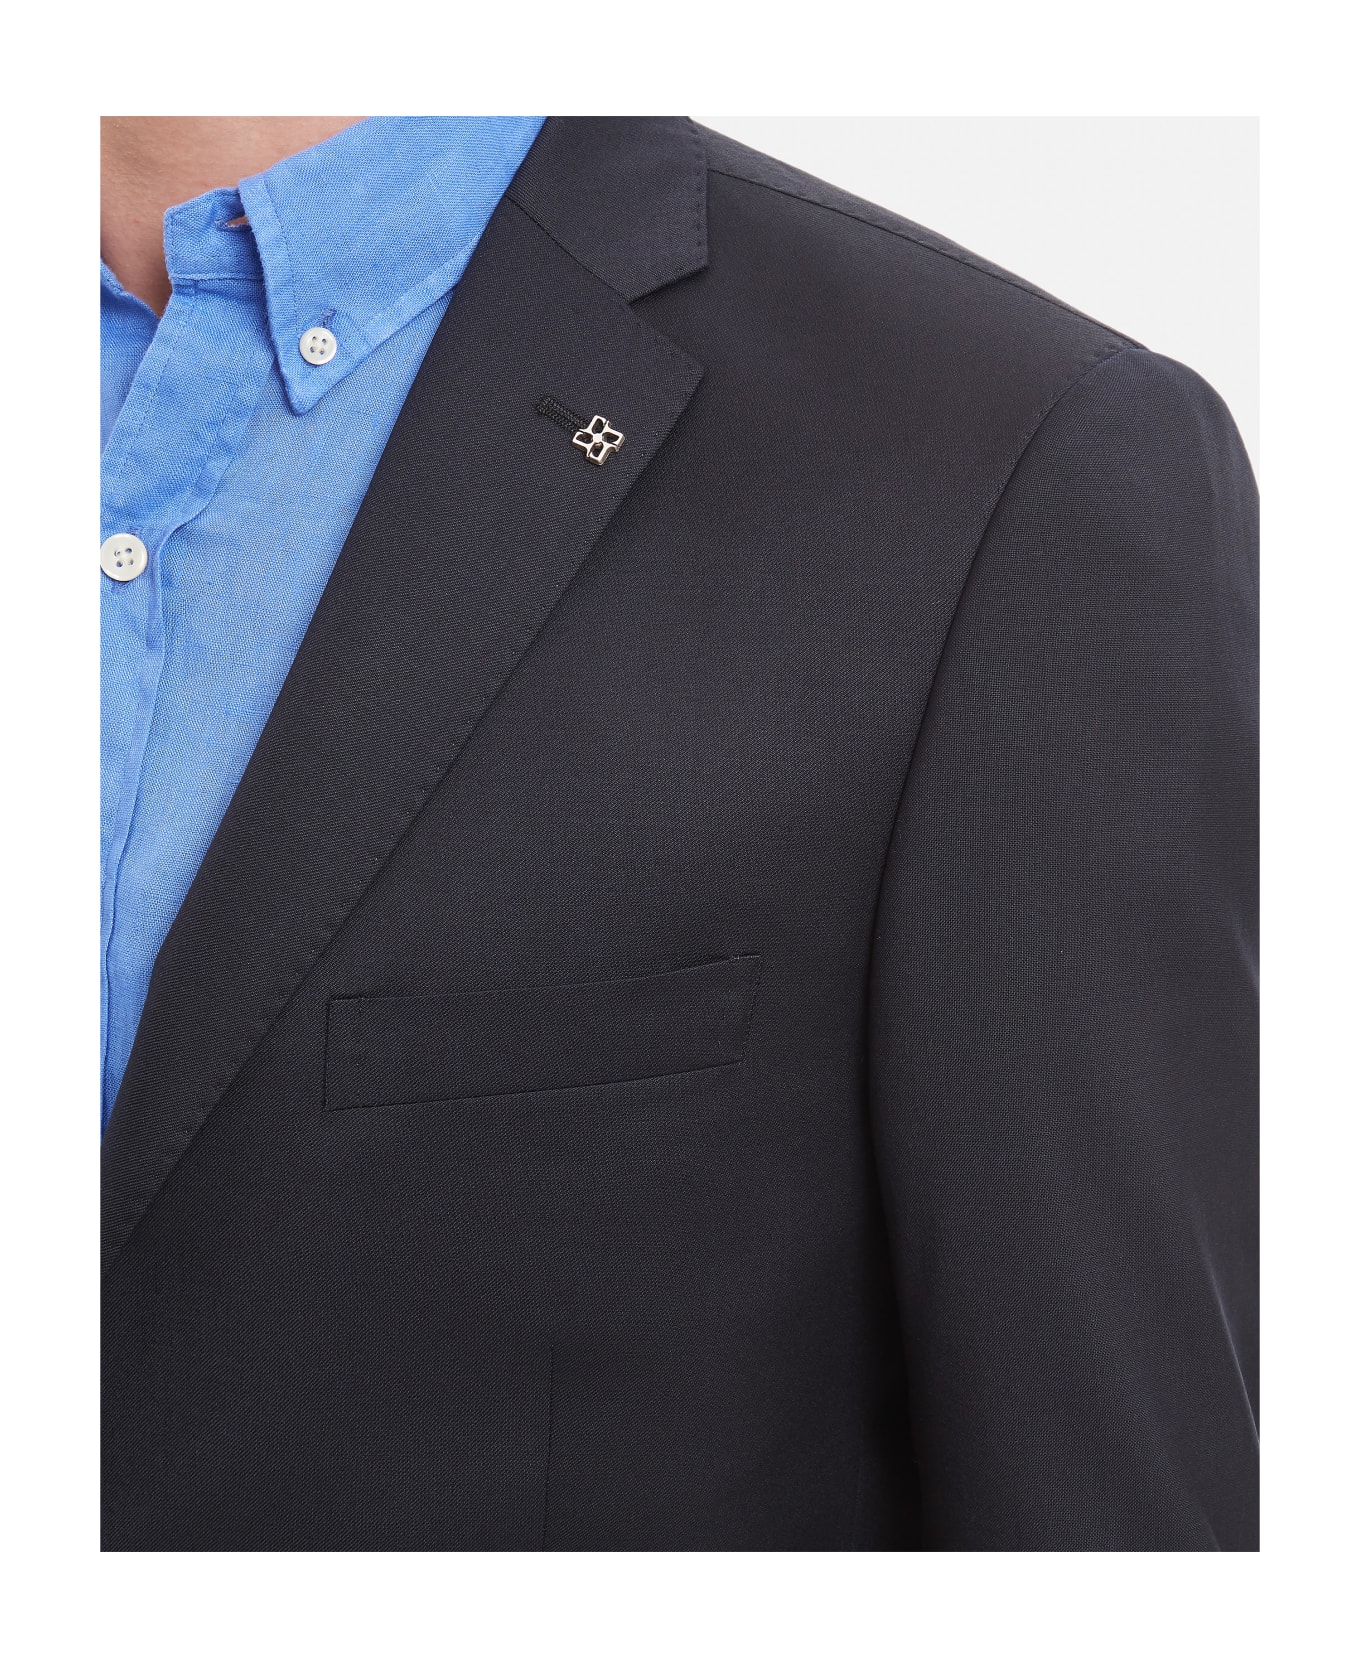 Tagliatore Cotton Dress Suit - Blue スーツ